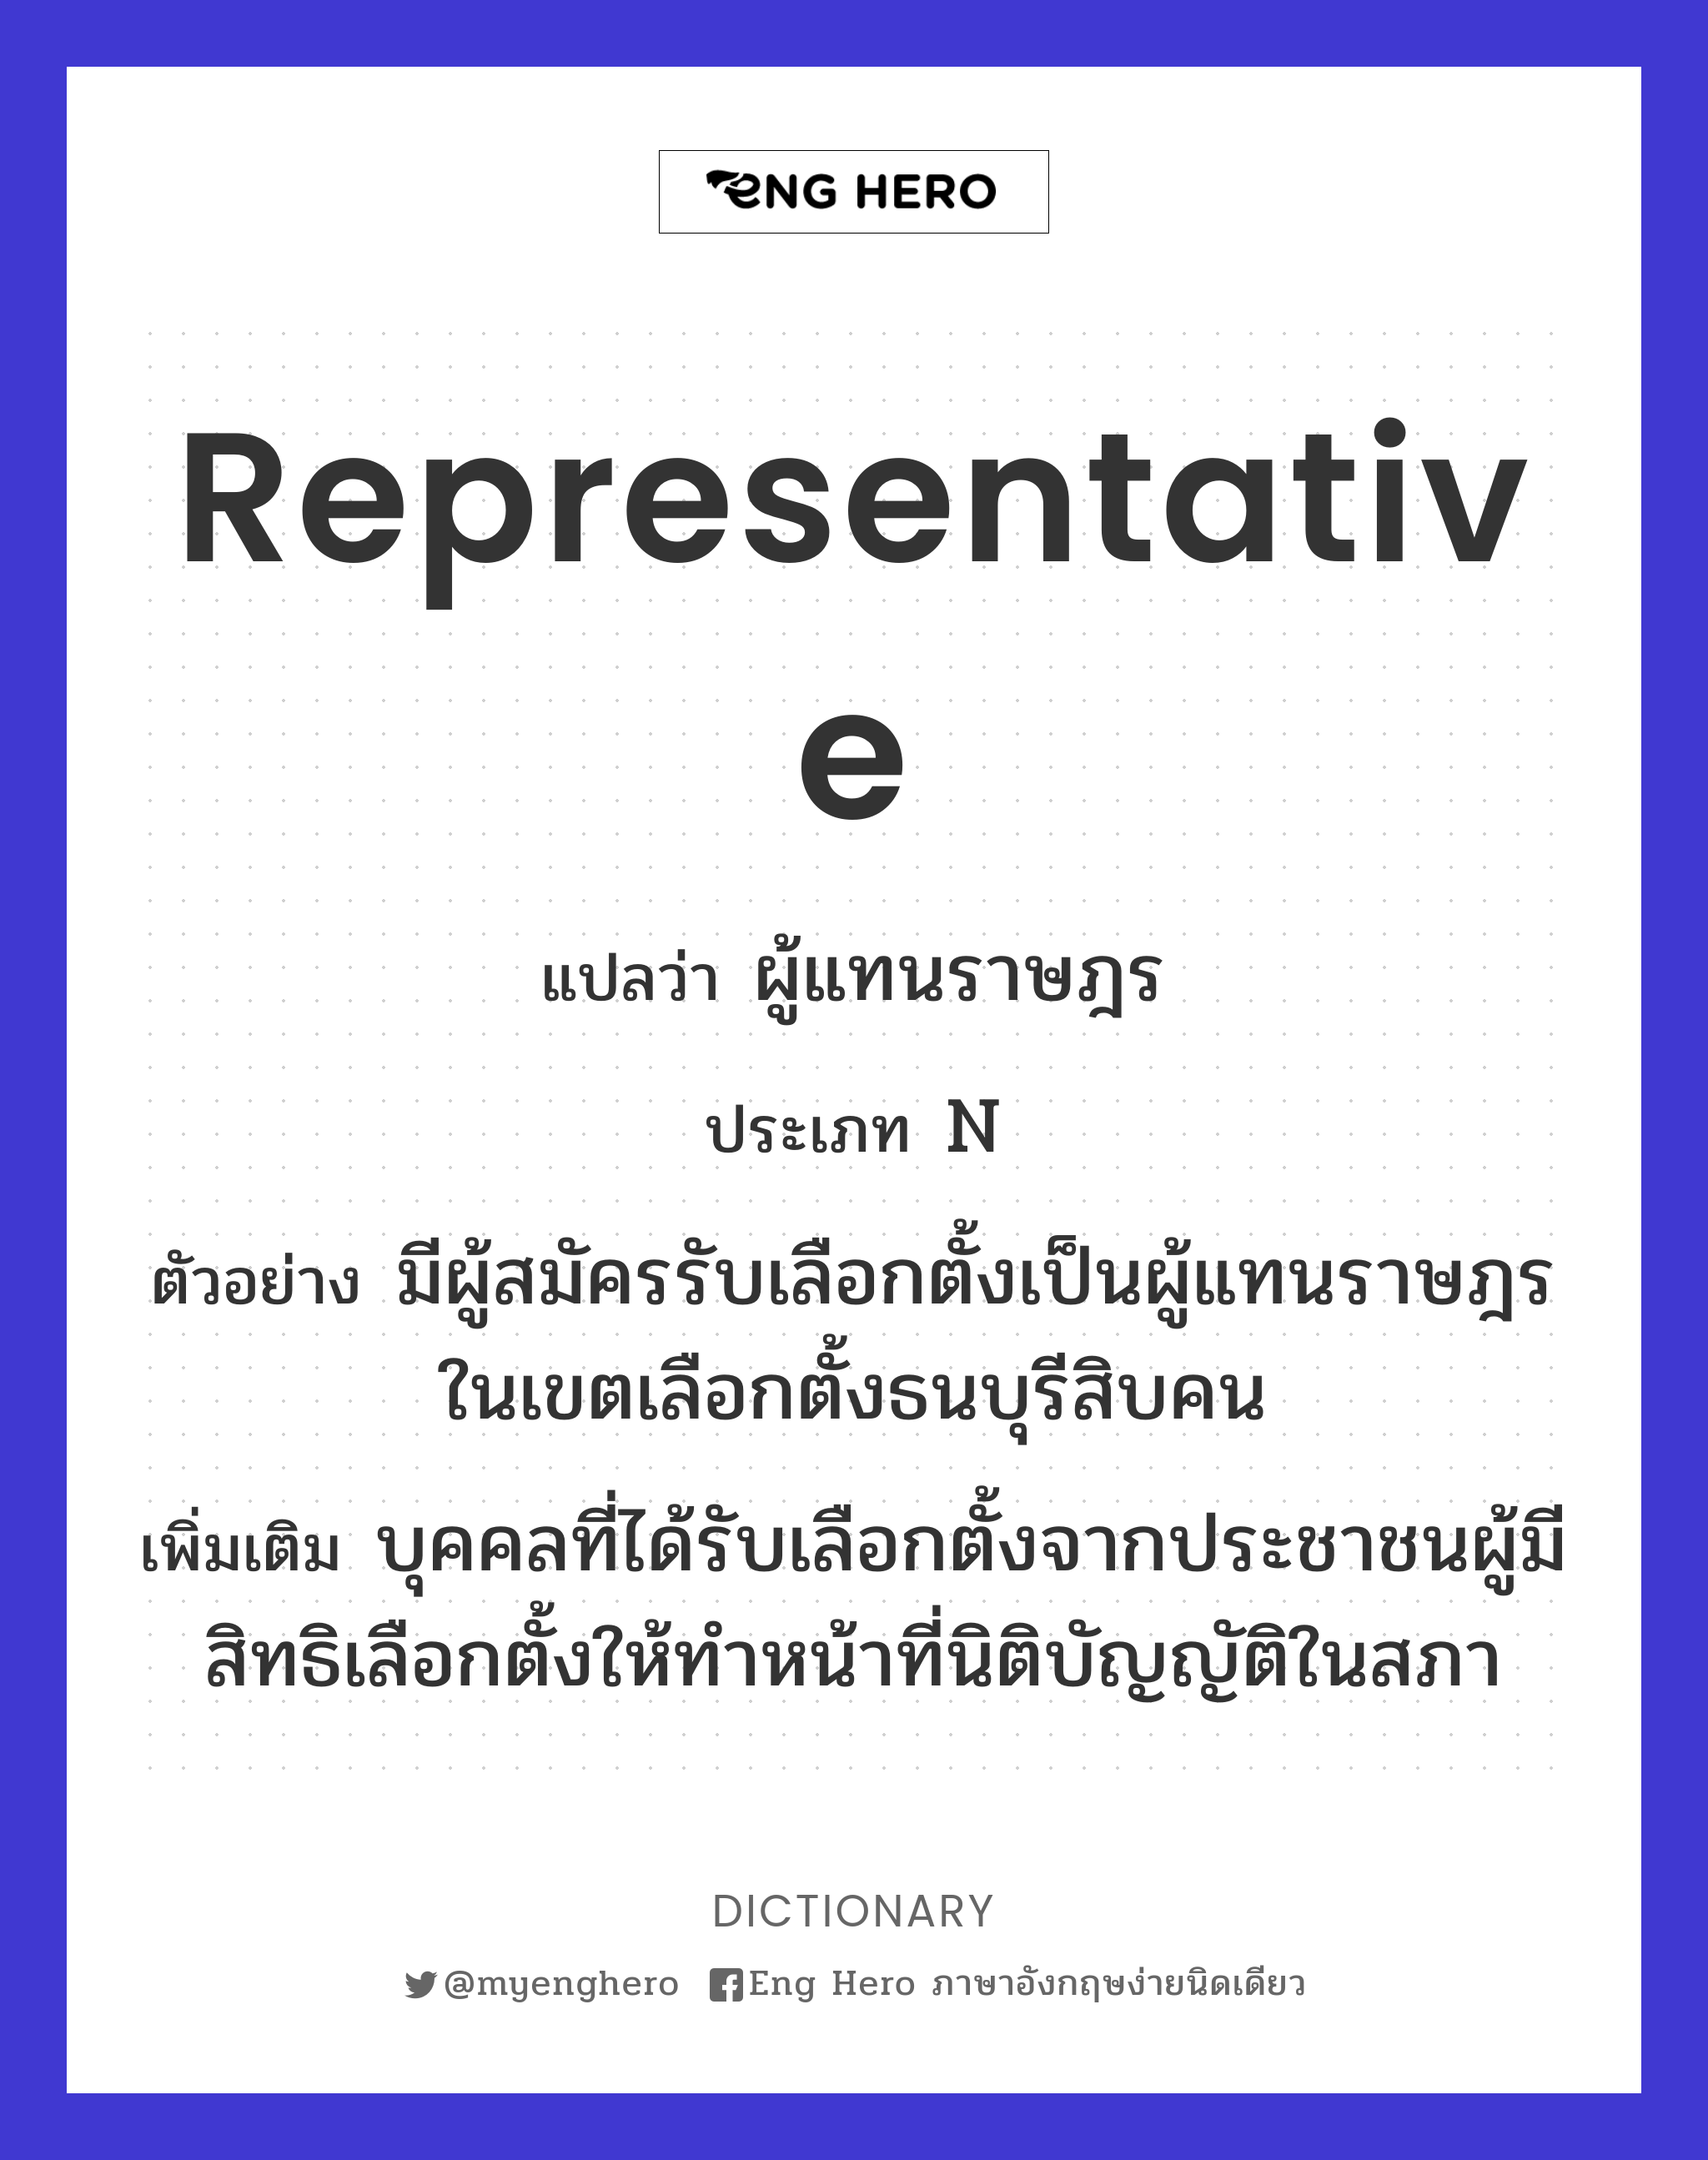 representative